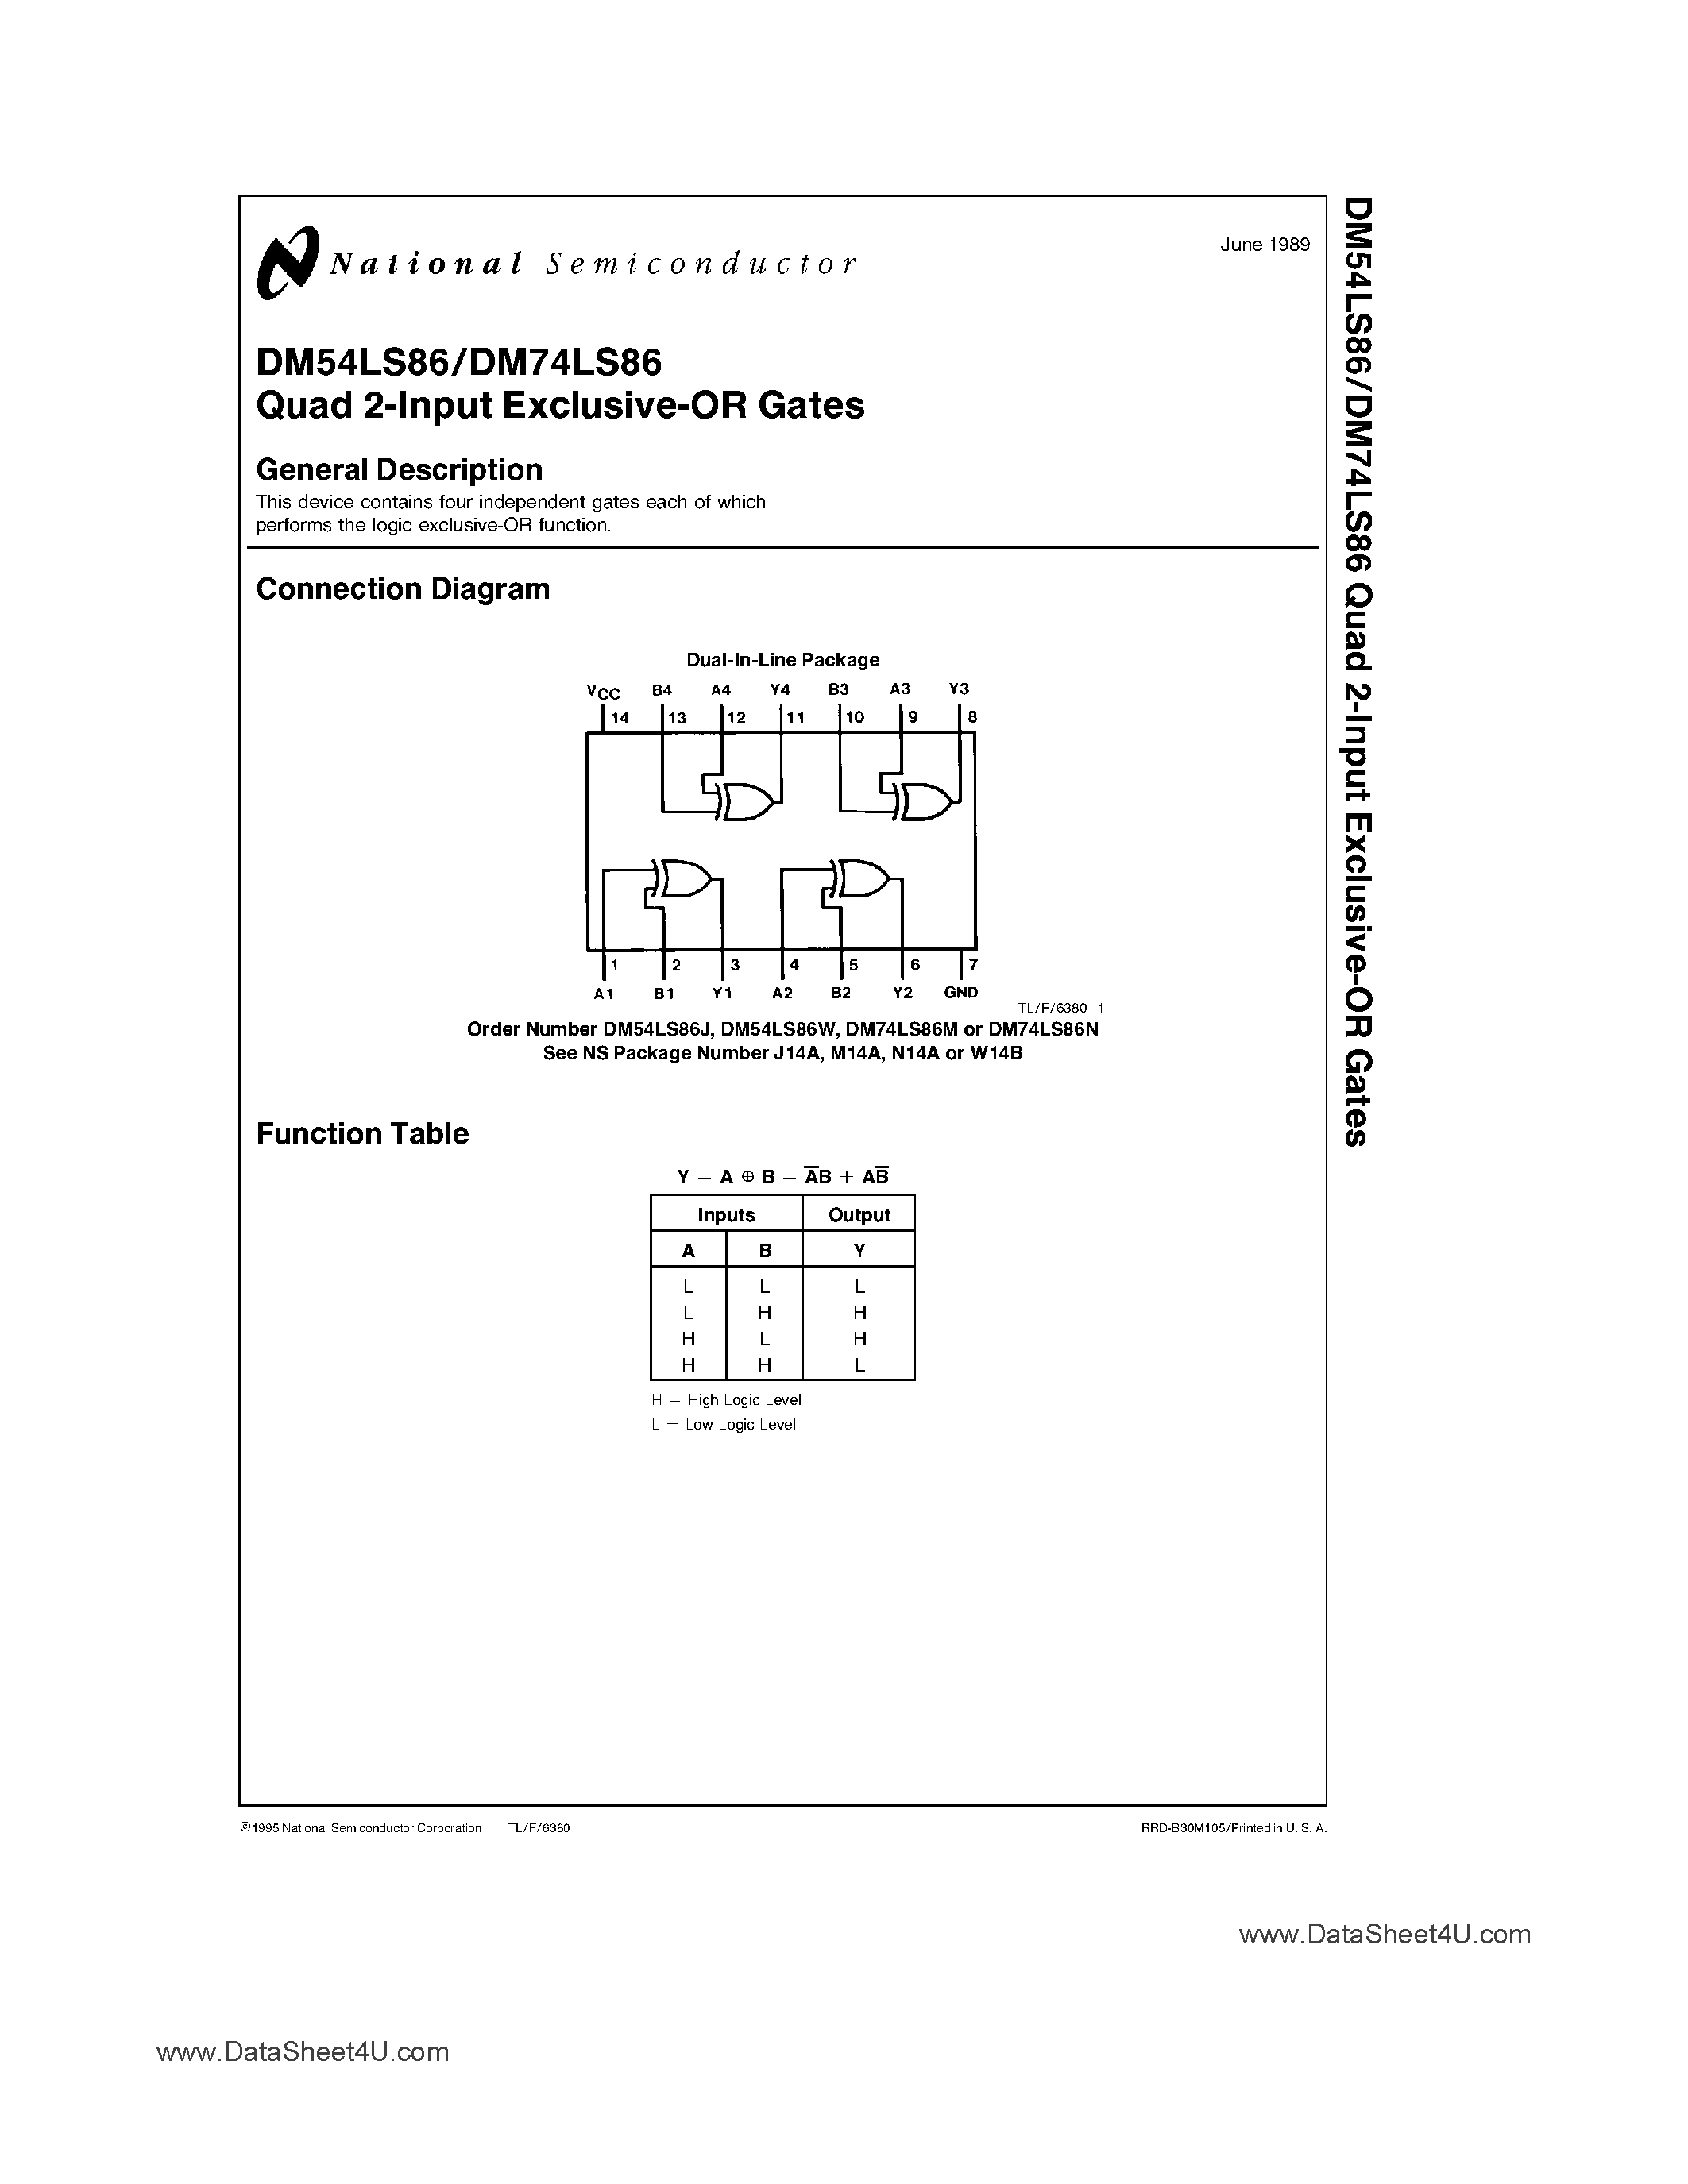 Datasheet DM74LS86 - Quad 2-Input Exclusive-OR Gates page 1